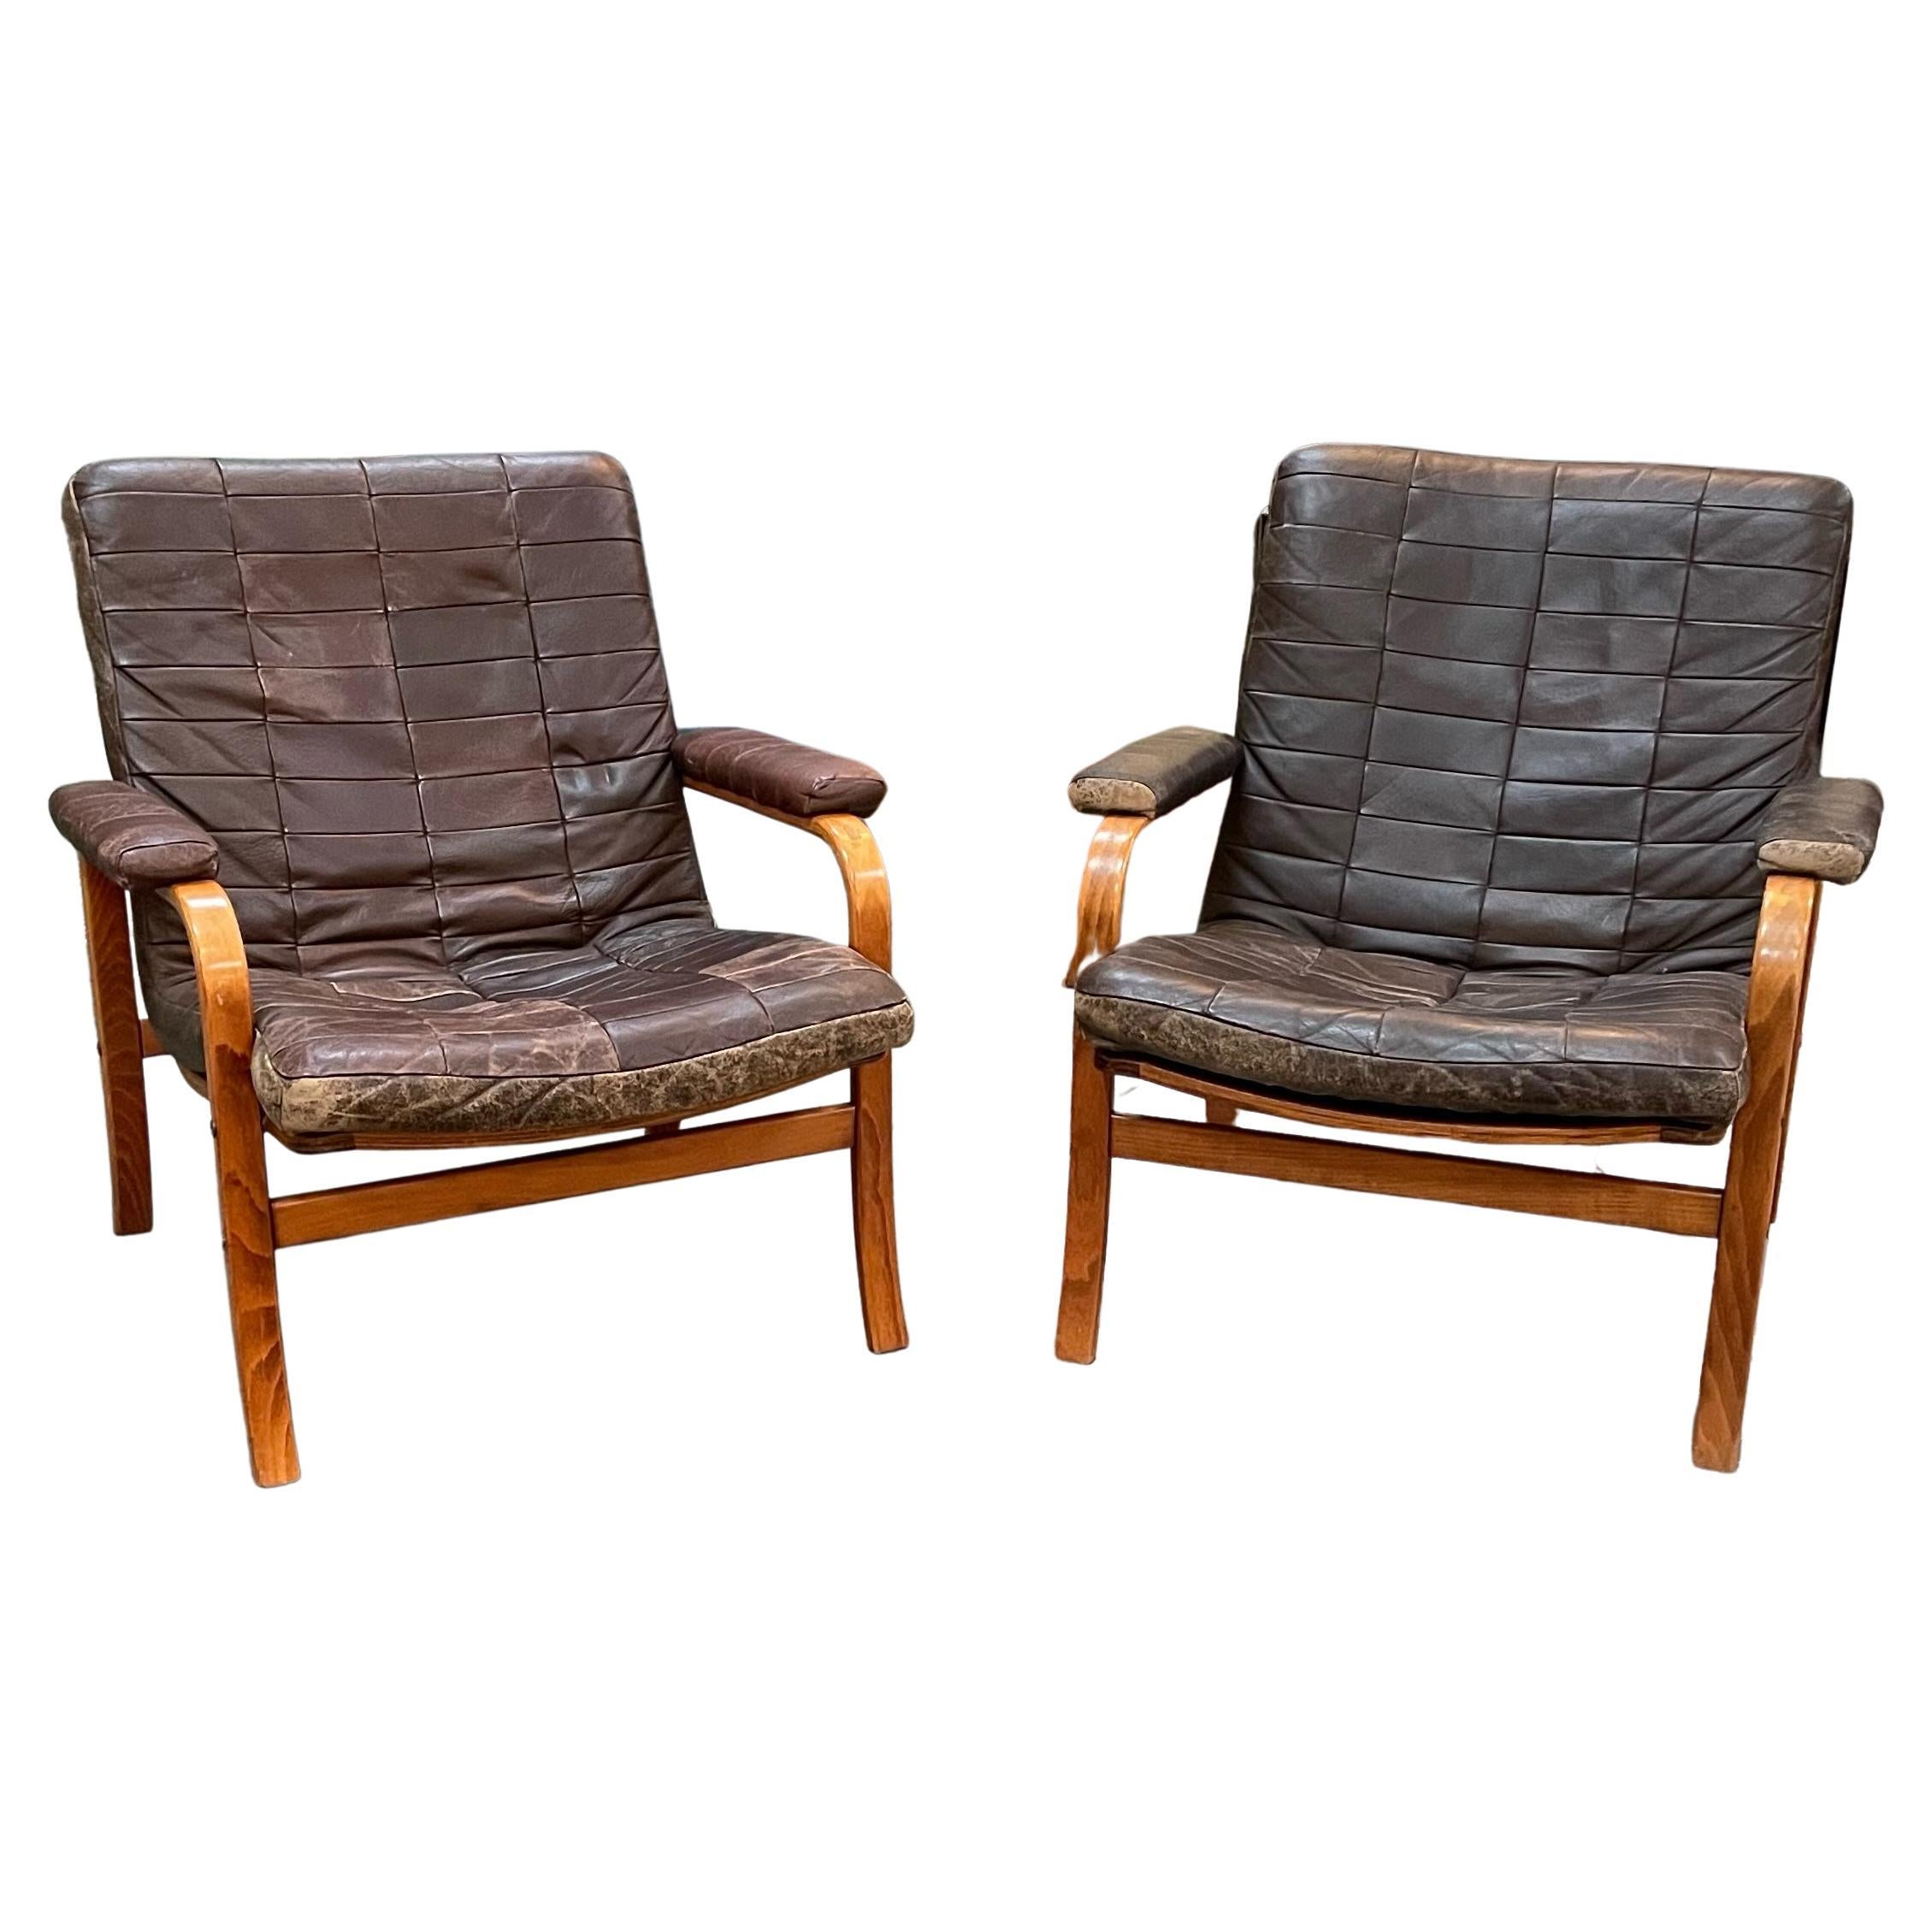 Pair of Swedish Göte Möbler Nässjö Leather Chairs